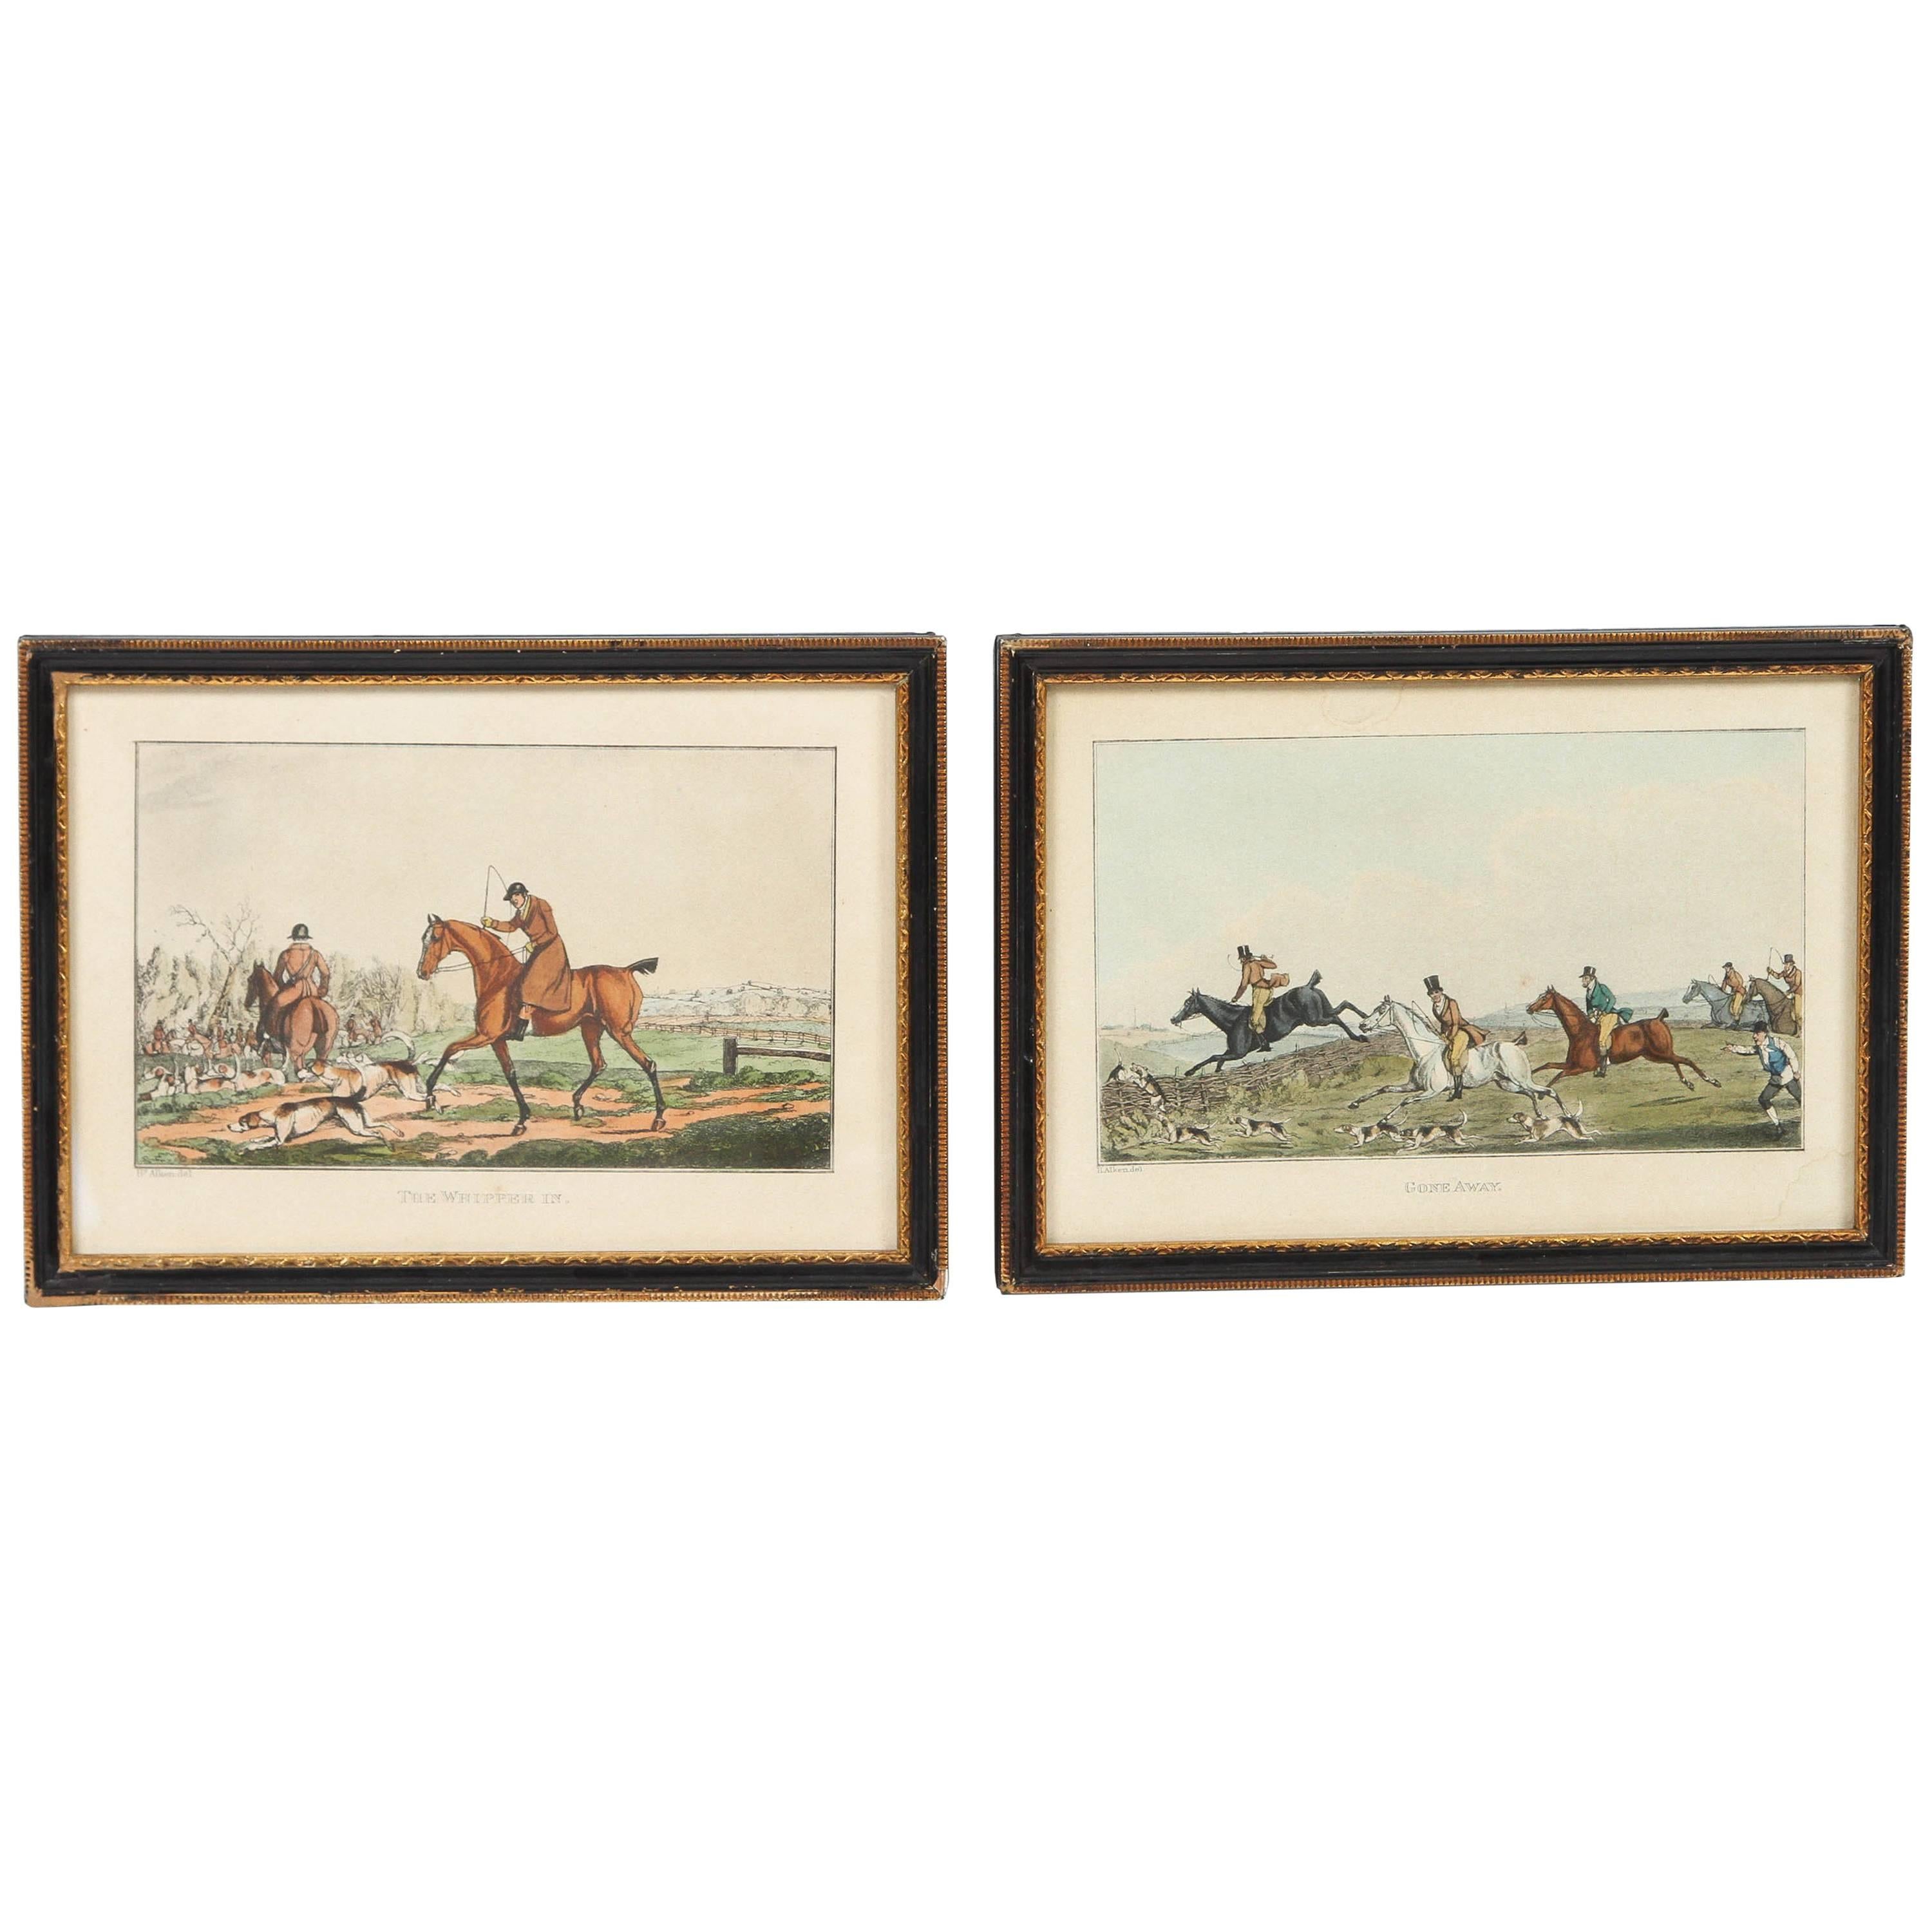 19th Century Copper Engravings of Equestrian Scenes by Henry Alken